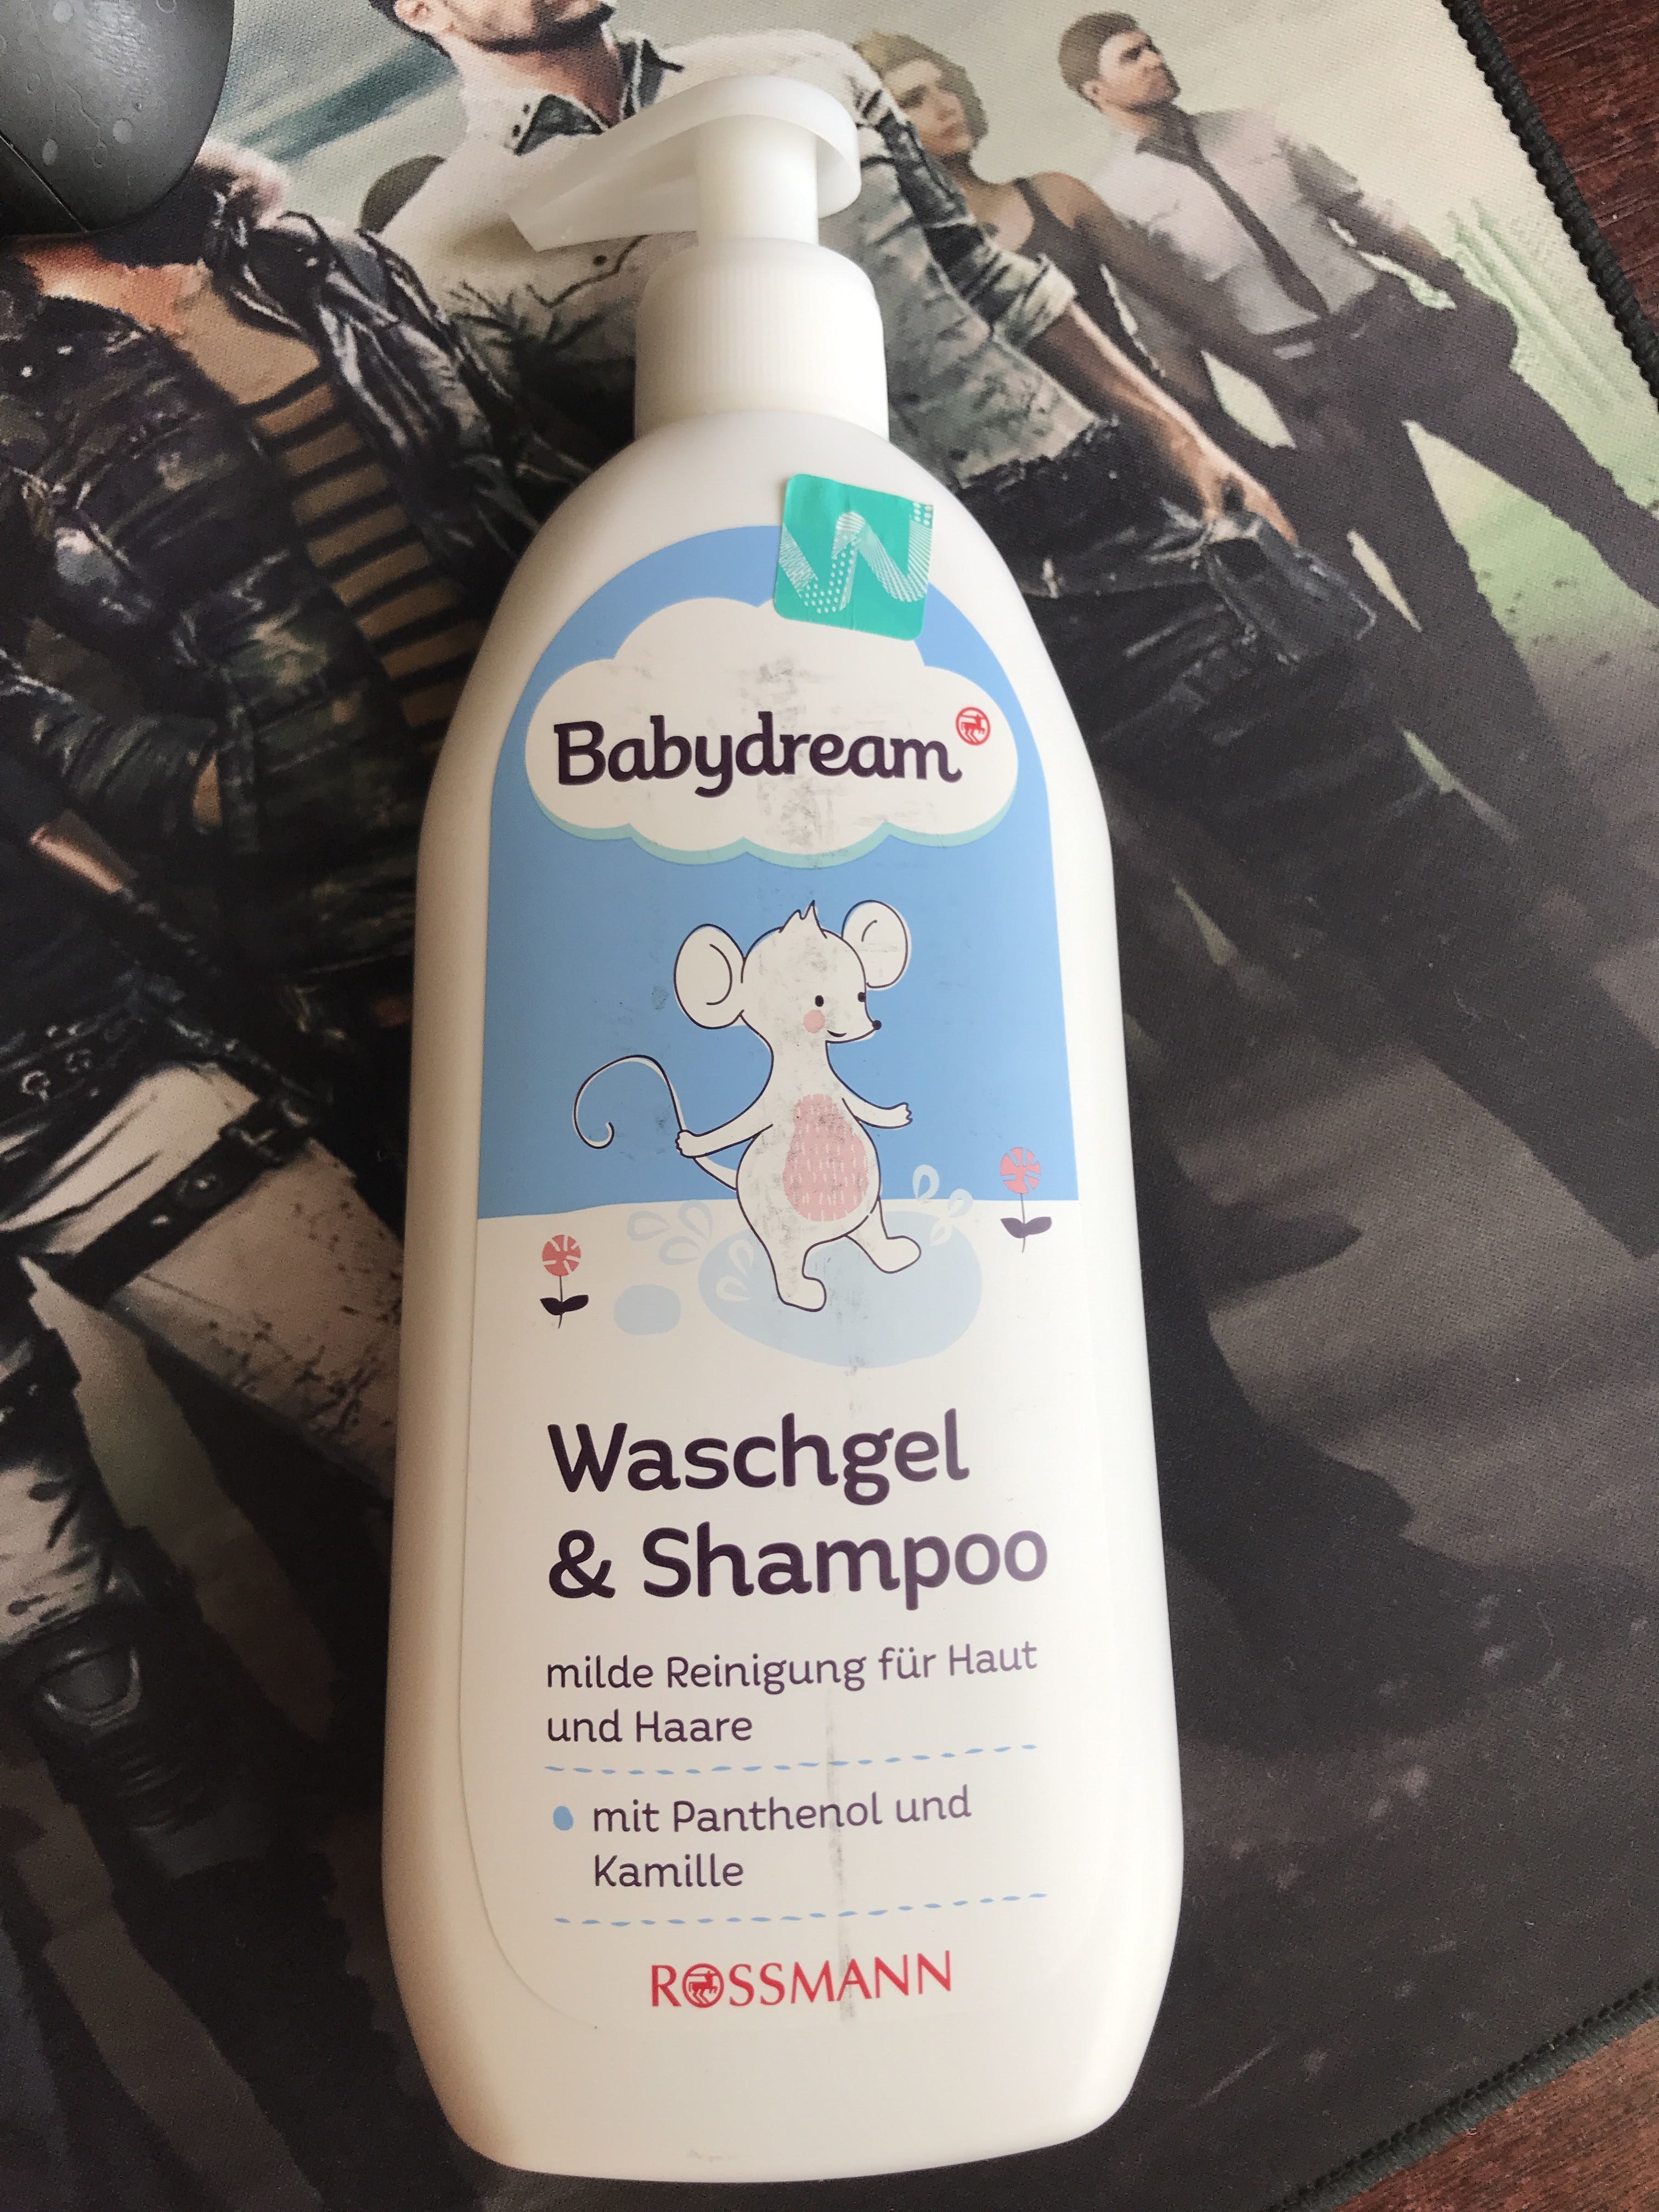 Washgel and shampoo - Product - ru